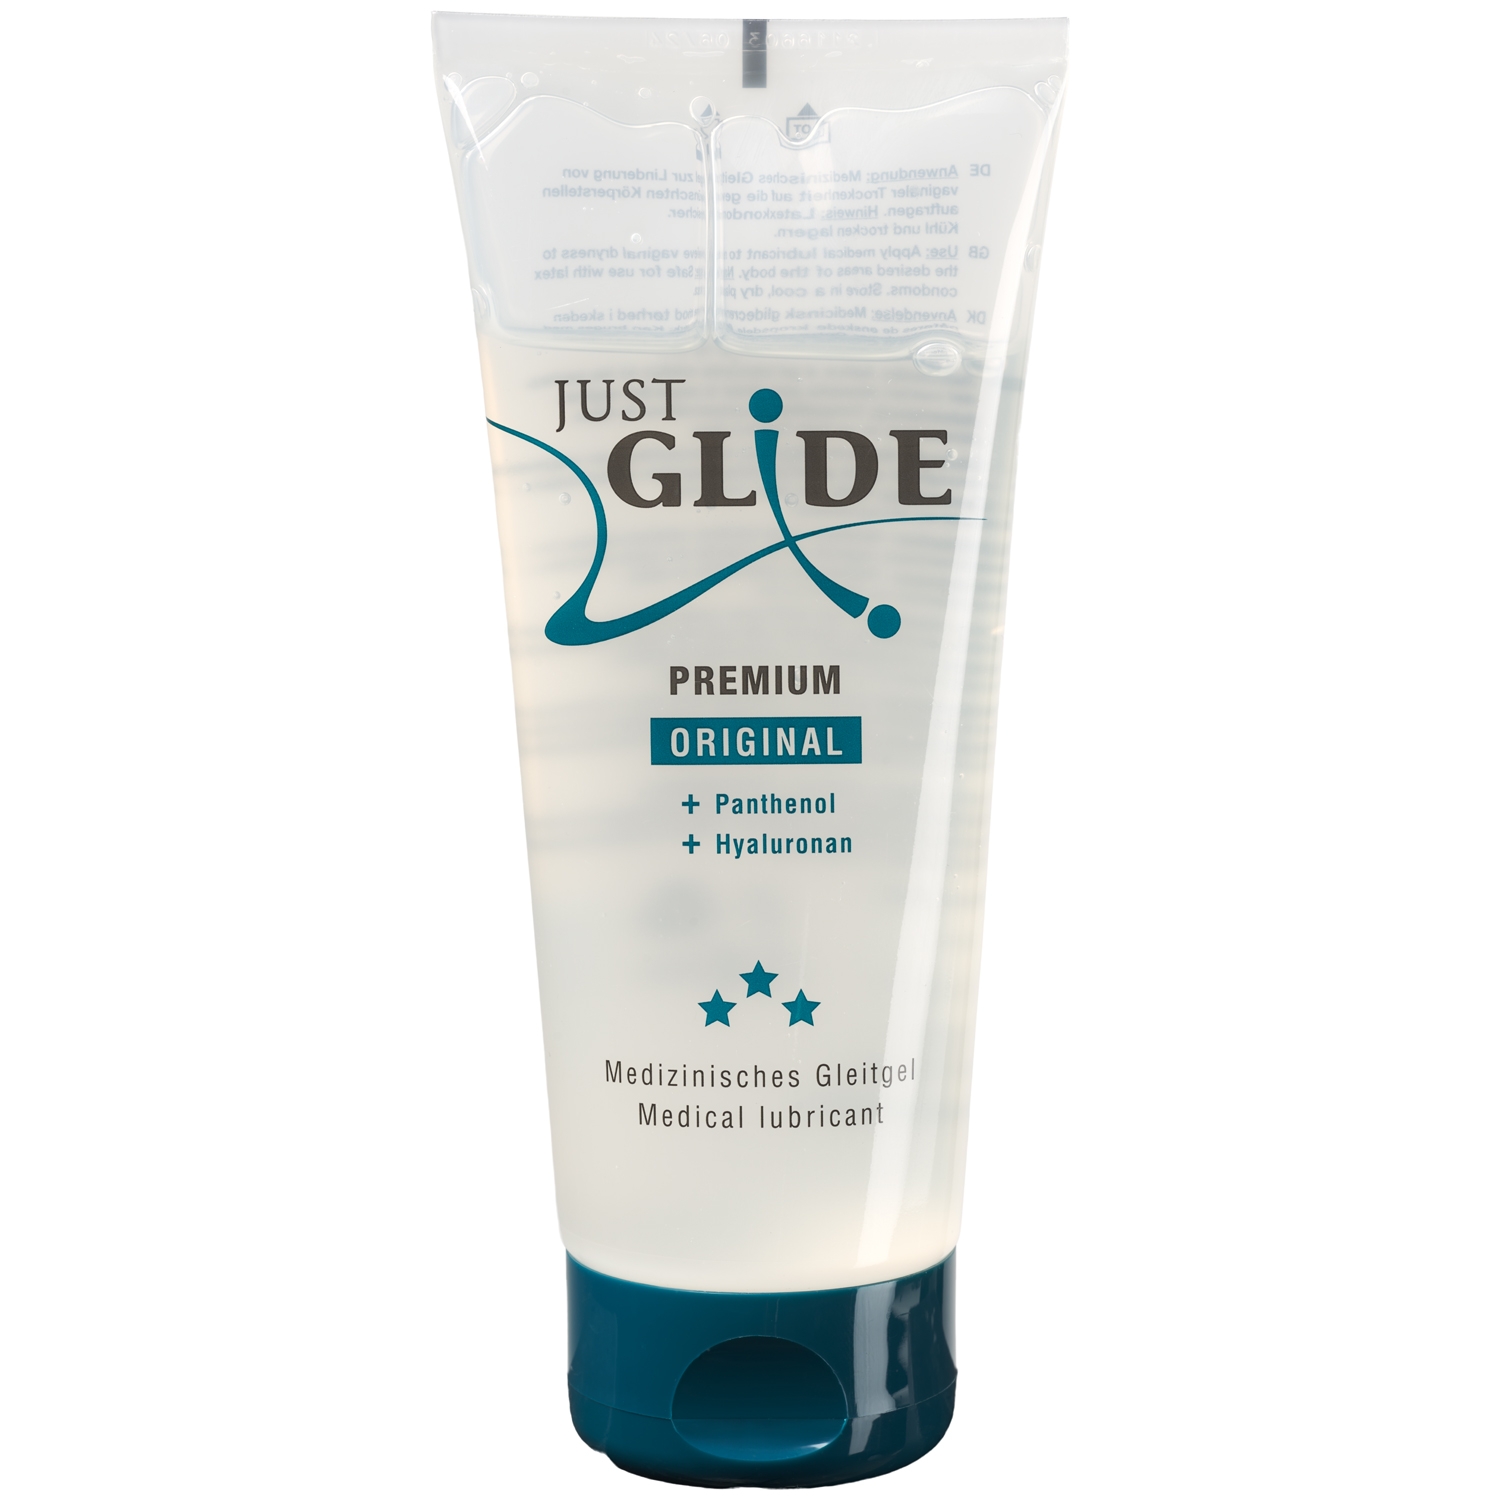 Just Glide Premium Original Vandbaseret Glidecreme med Hyaluronsyre 200 ml   - Klar